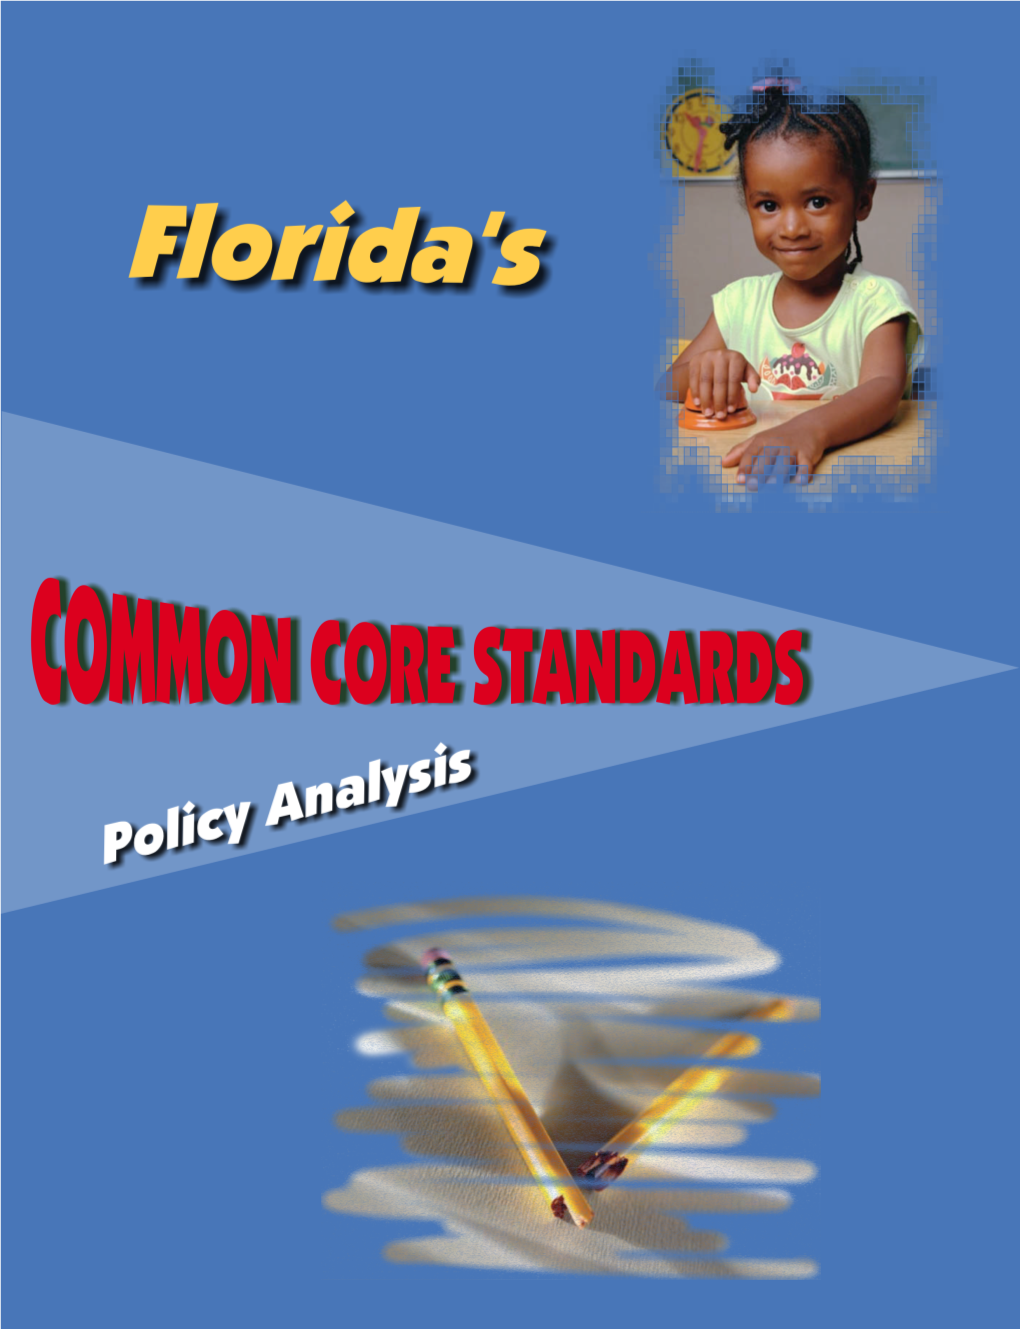 Florida's Common Core Standards